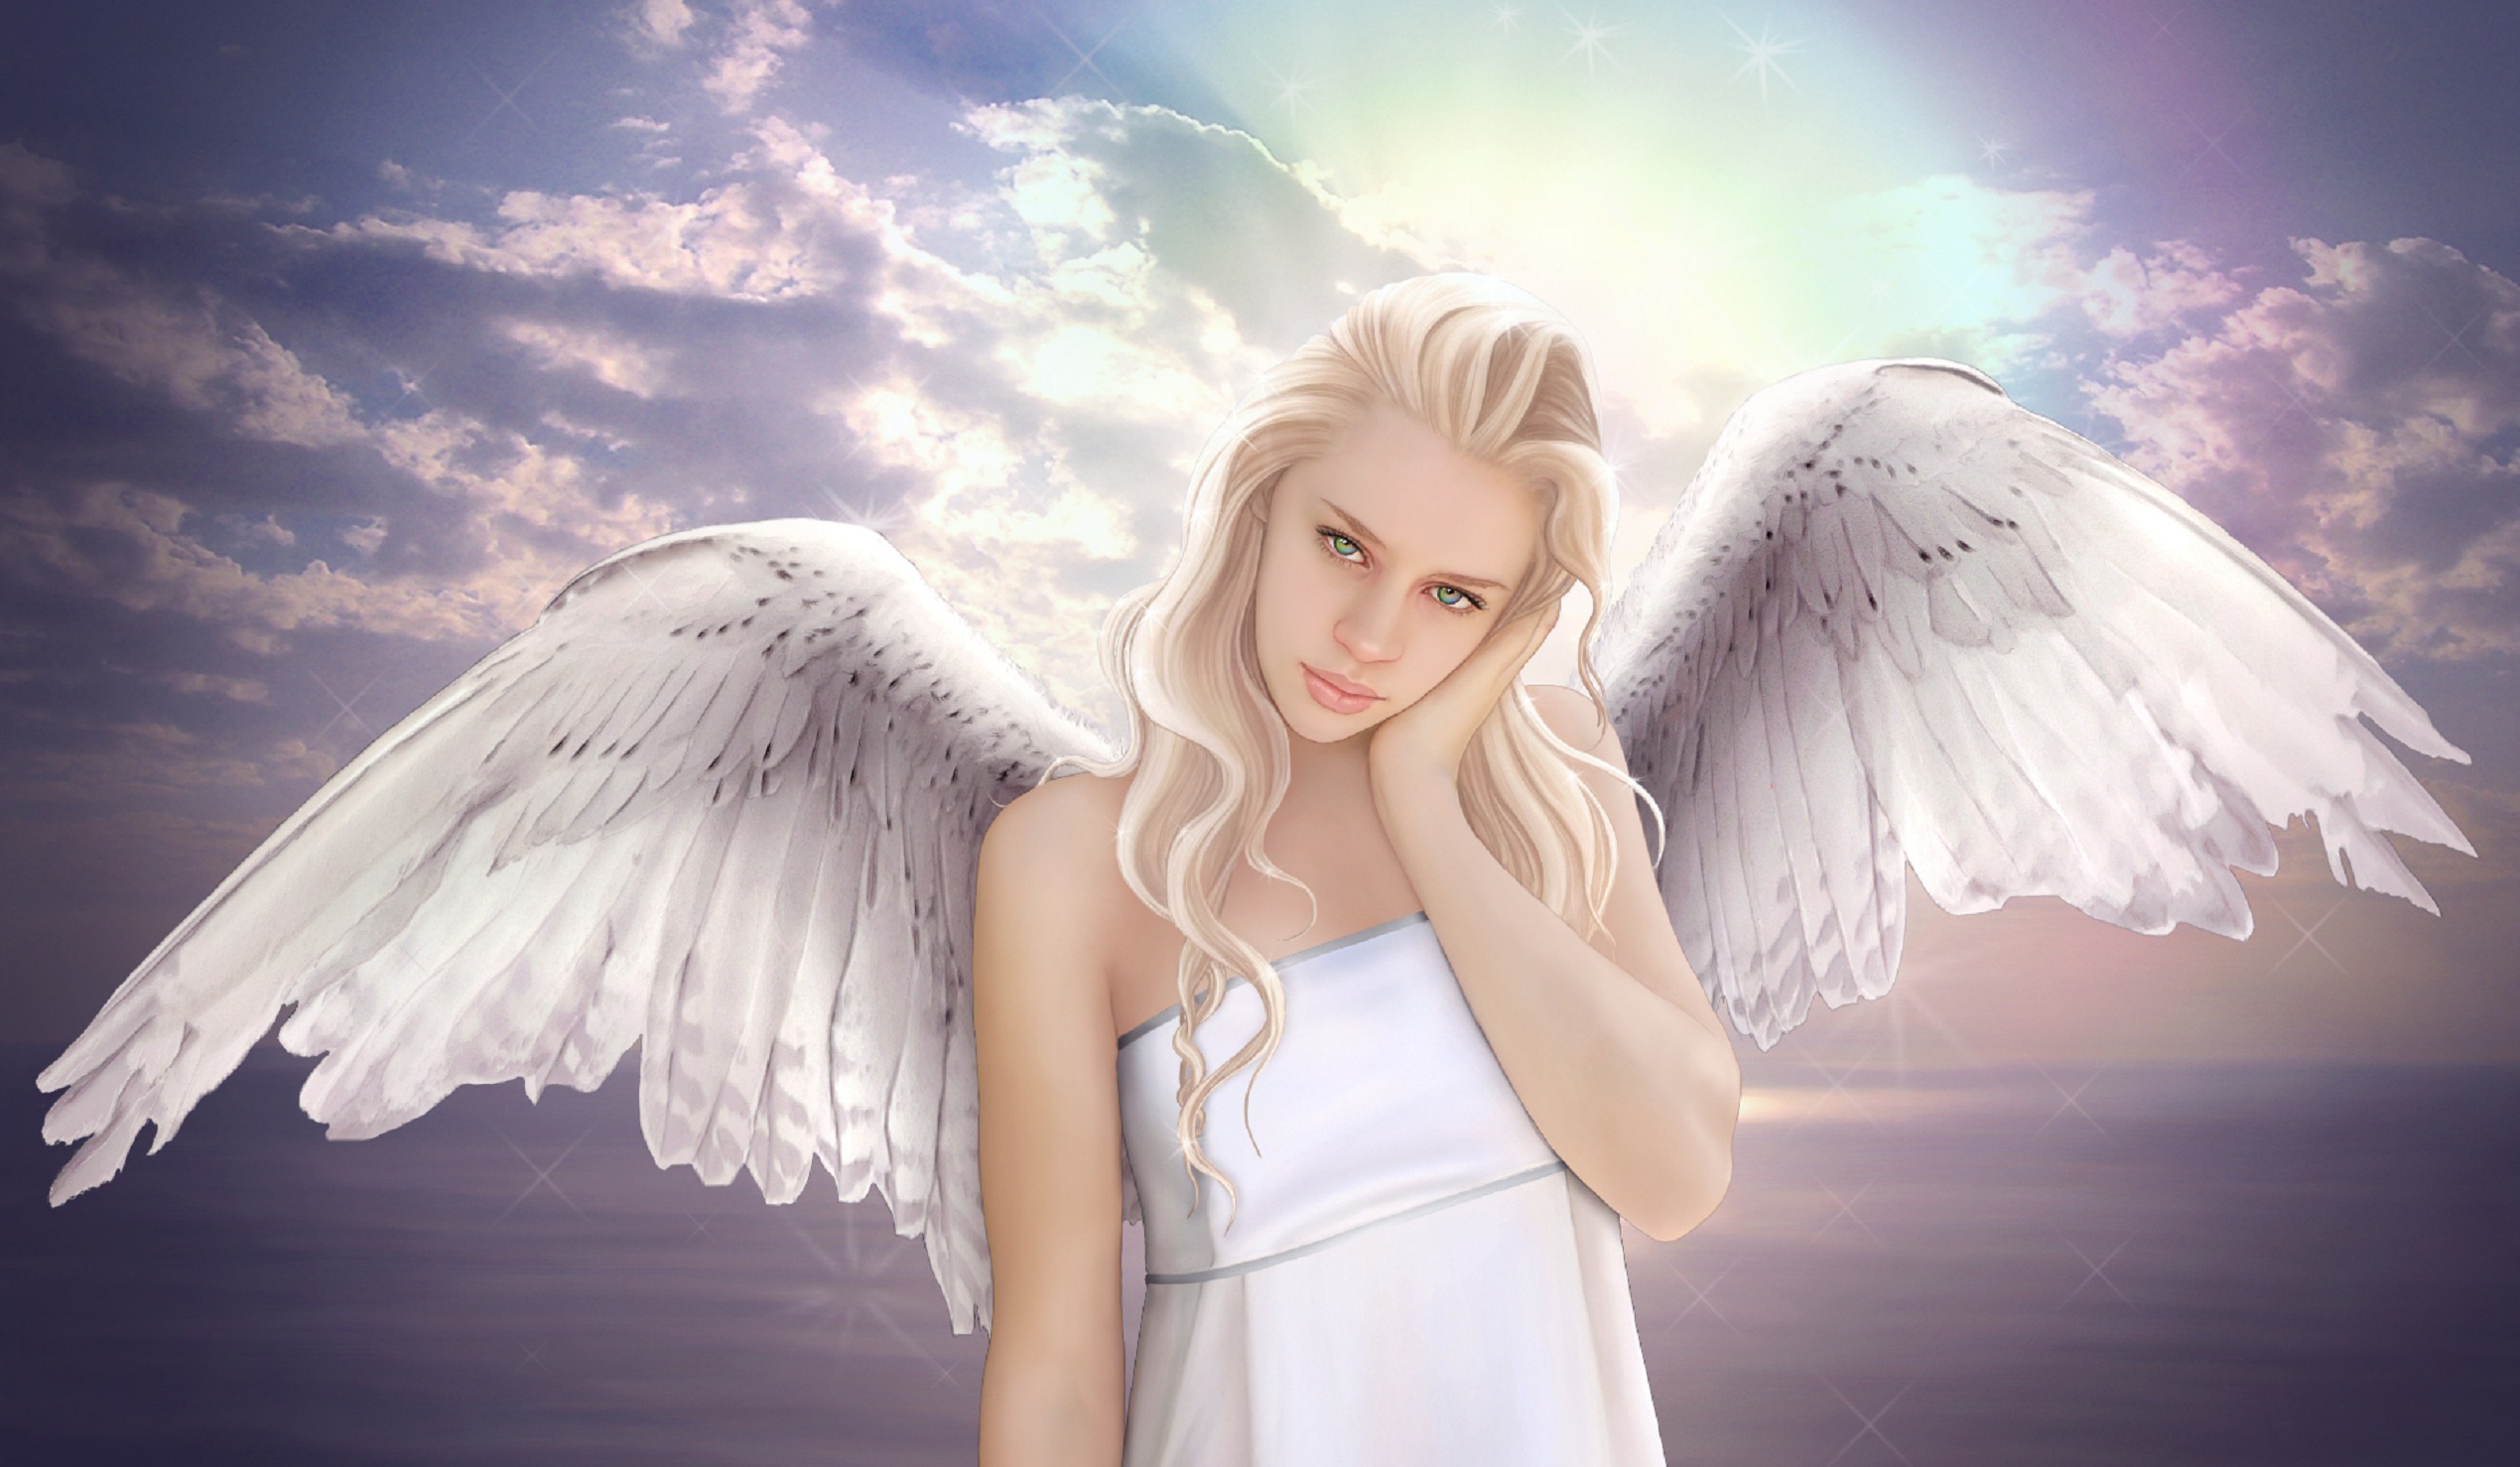 Teen girls angels models. Девушка - ангел. Девушка с крыльями. Красивый ангел. Девушка ангел с крыльями.